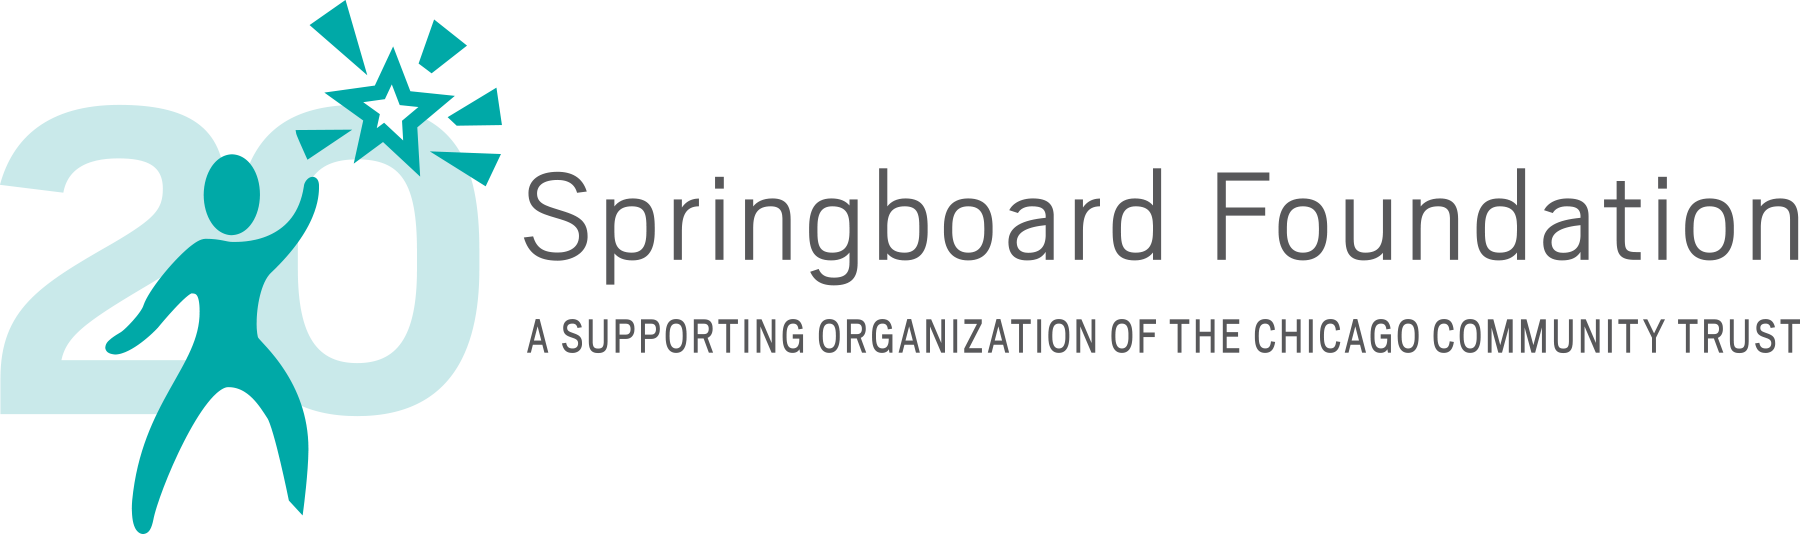 Springboard-Foundation-Anniversary-Logo.png